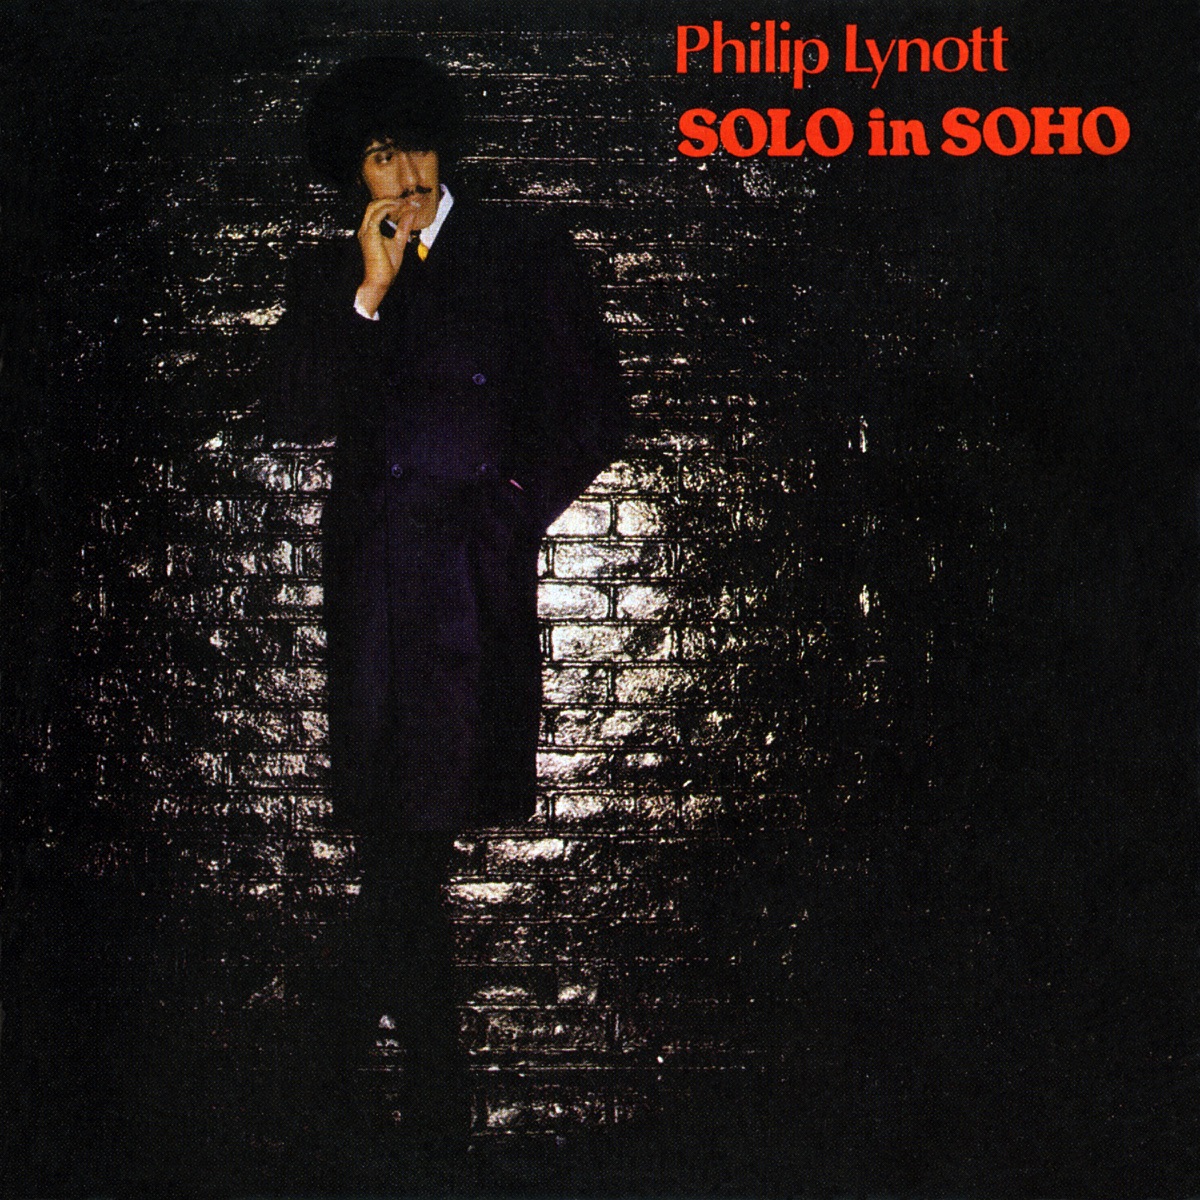 The Philip Lynott Album - Album by Phil Lynott - Apple Music